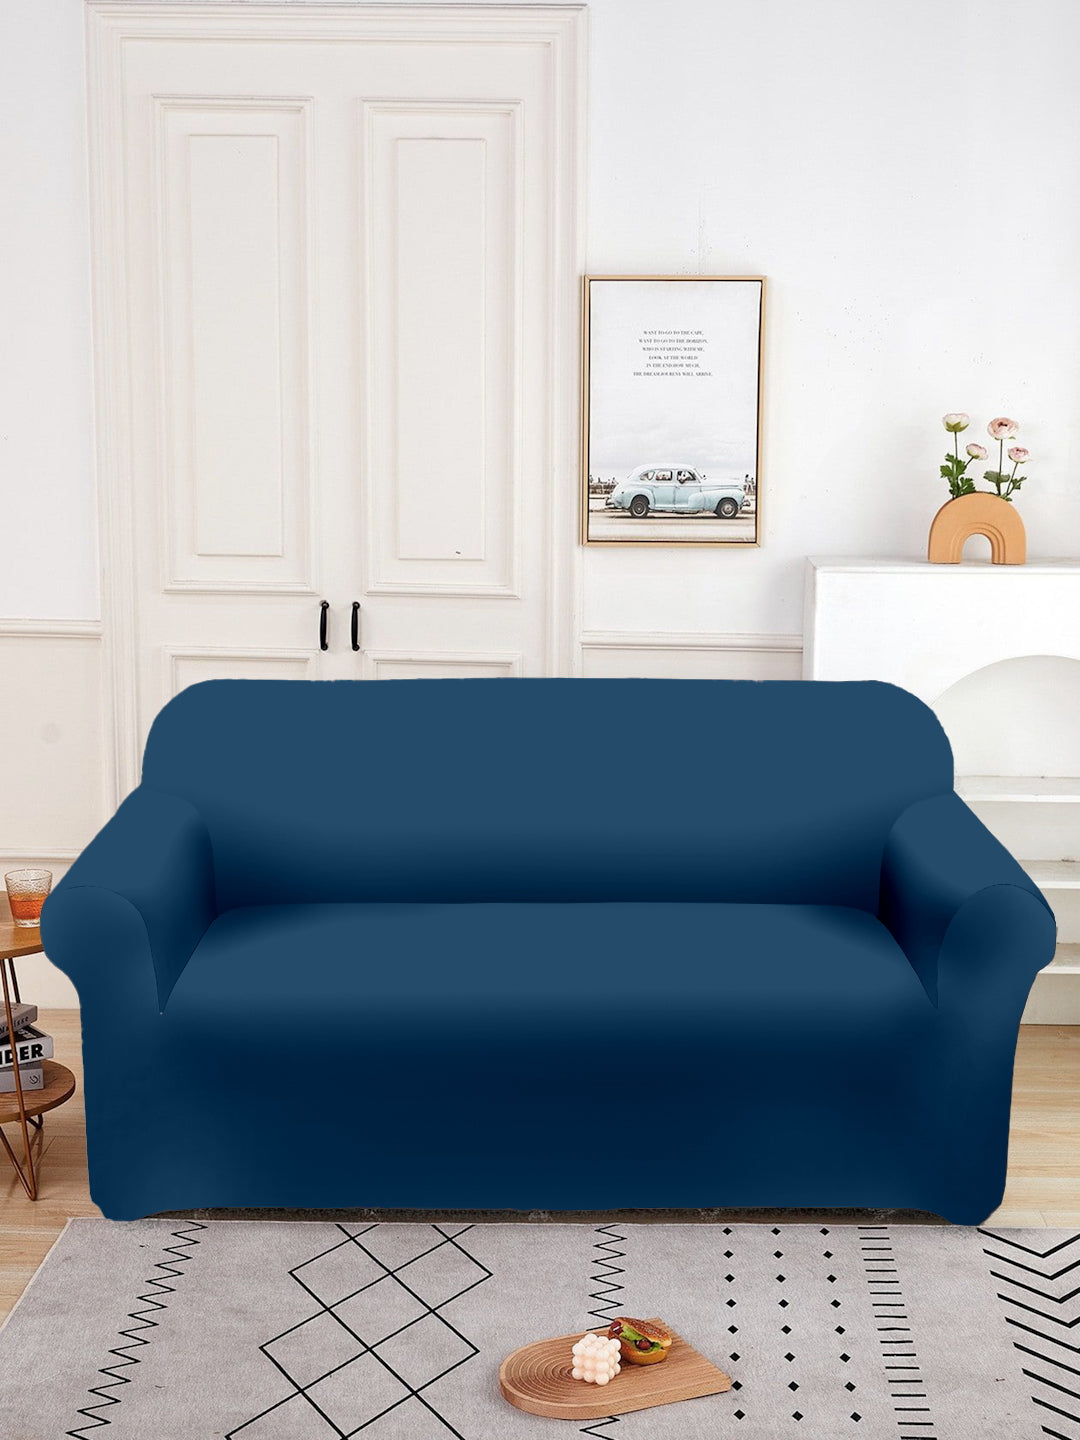 Elastic Stretchable Sofa Cover 3 Seater- Dark Blue